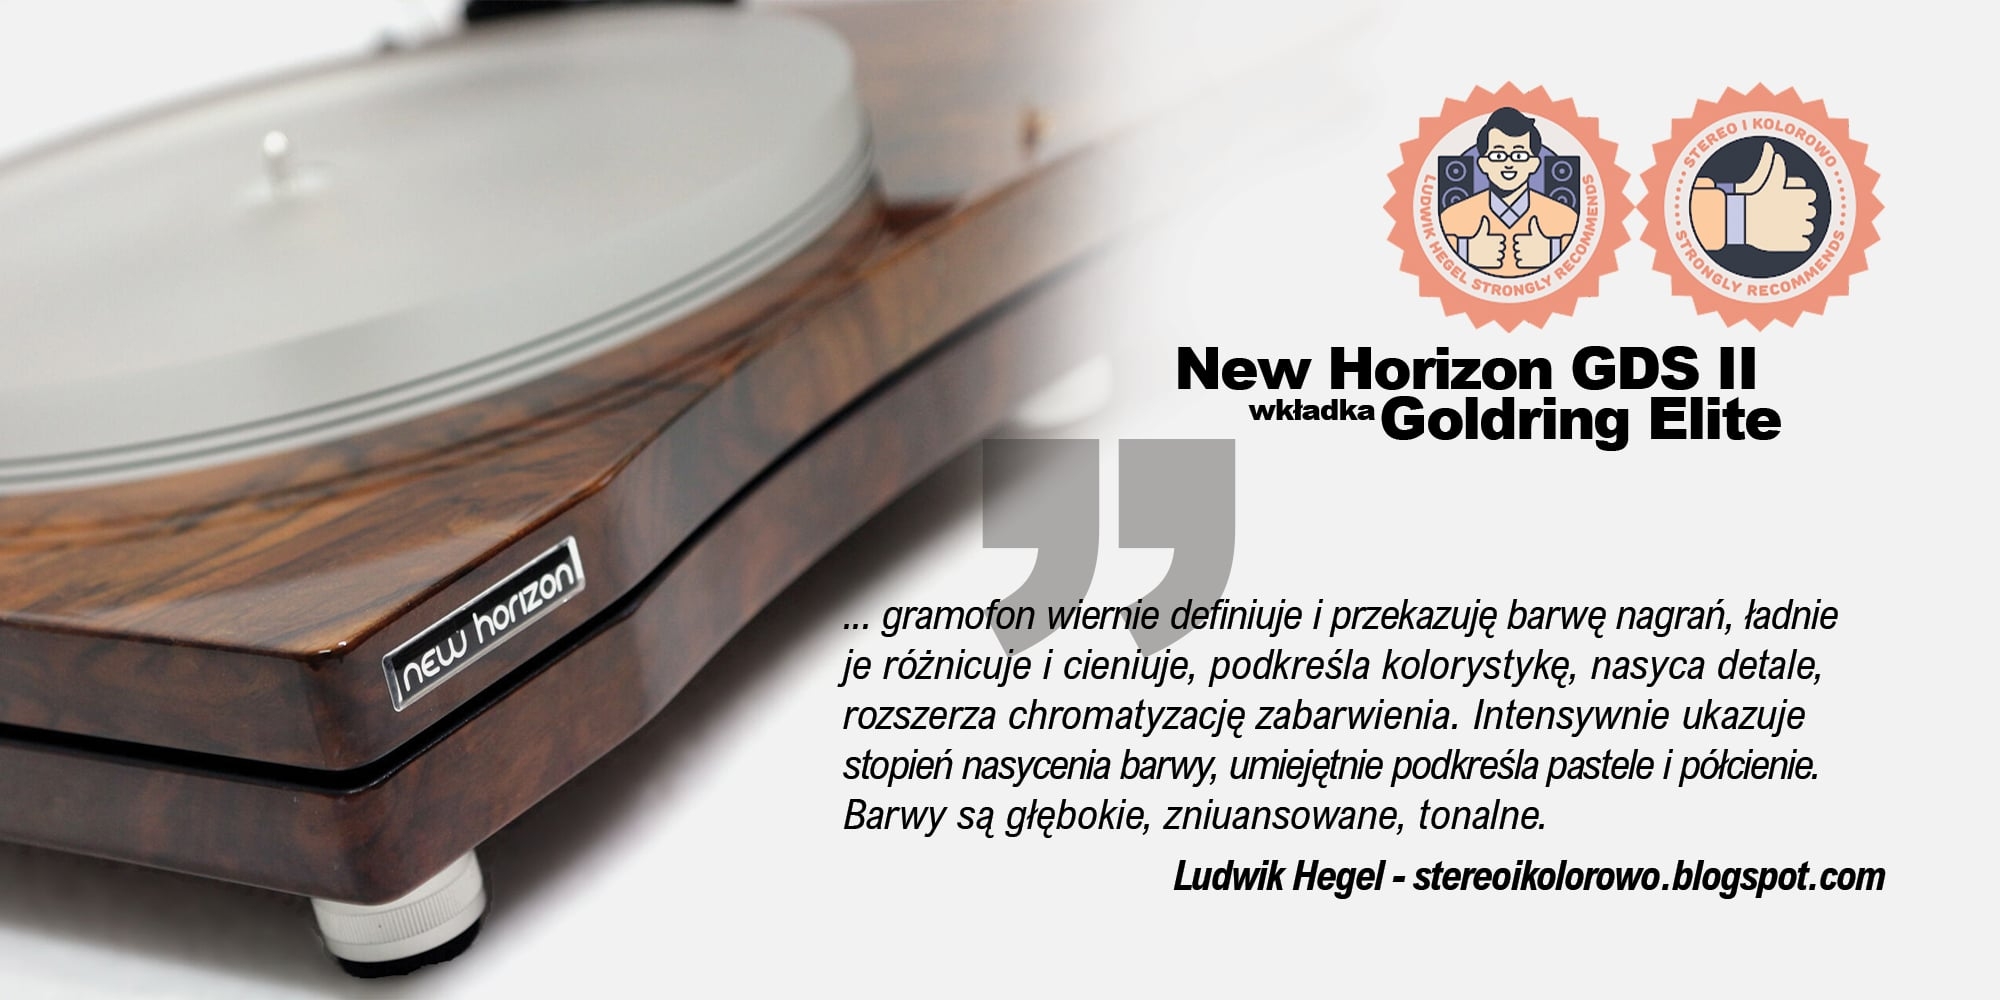 Recenzja i nagroda New Horizon GDS II - Stereo i Kolorowo